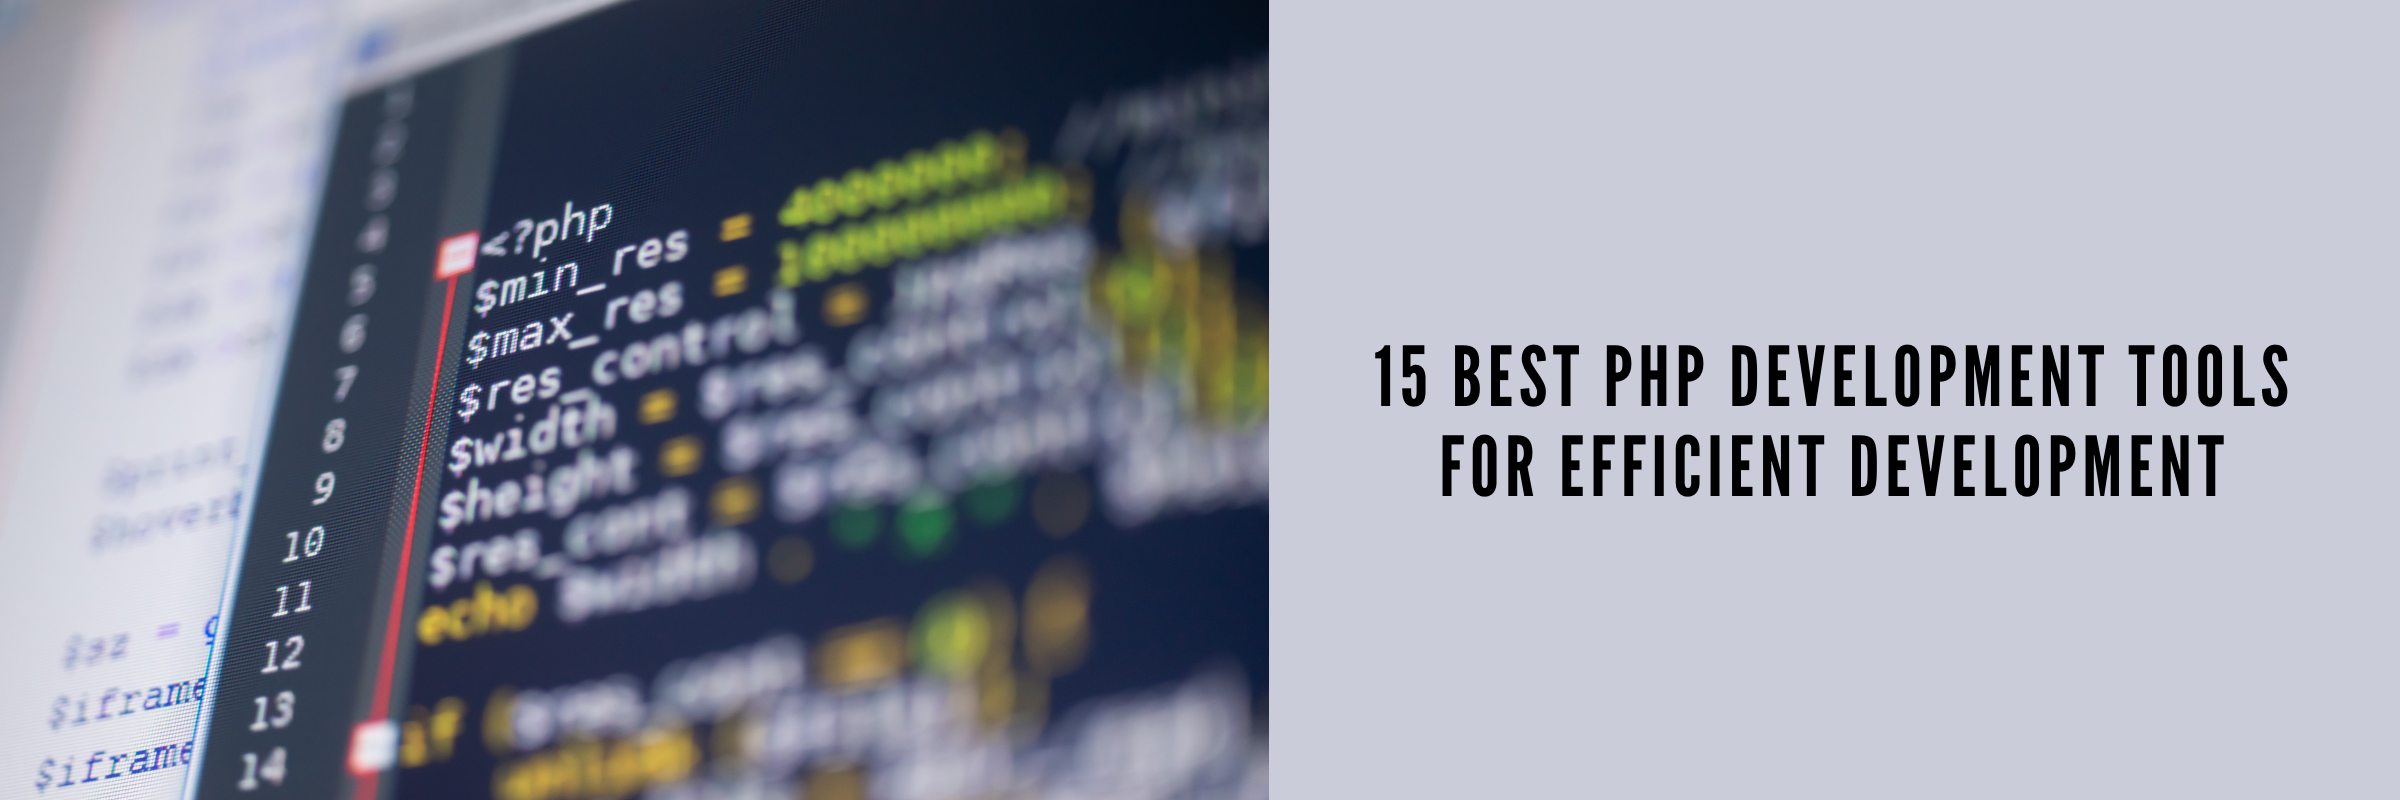 15 Best PHP Development Tools For Efficient Development